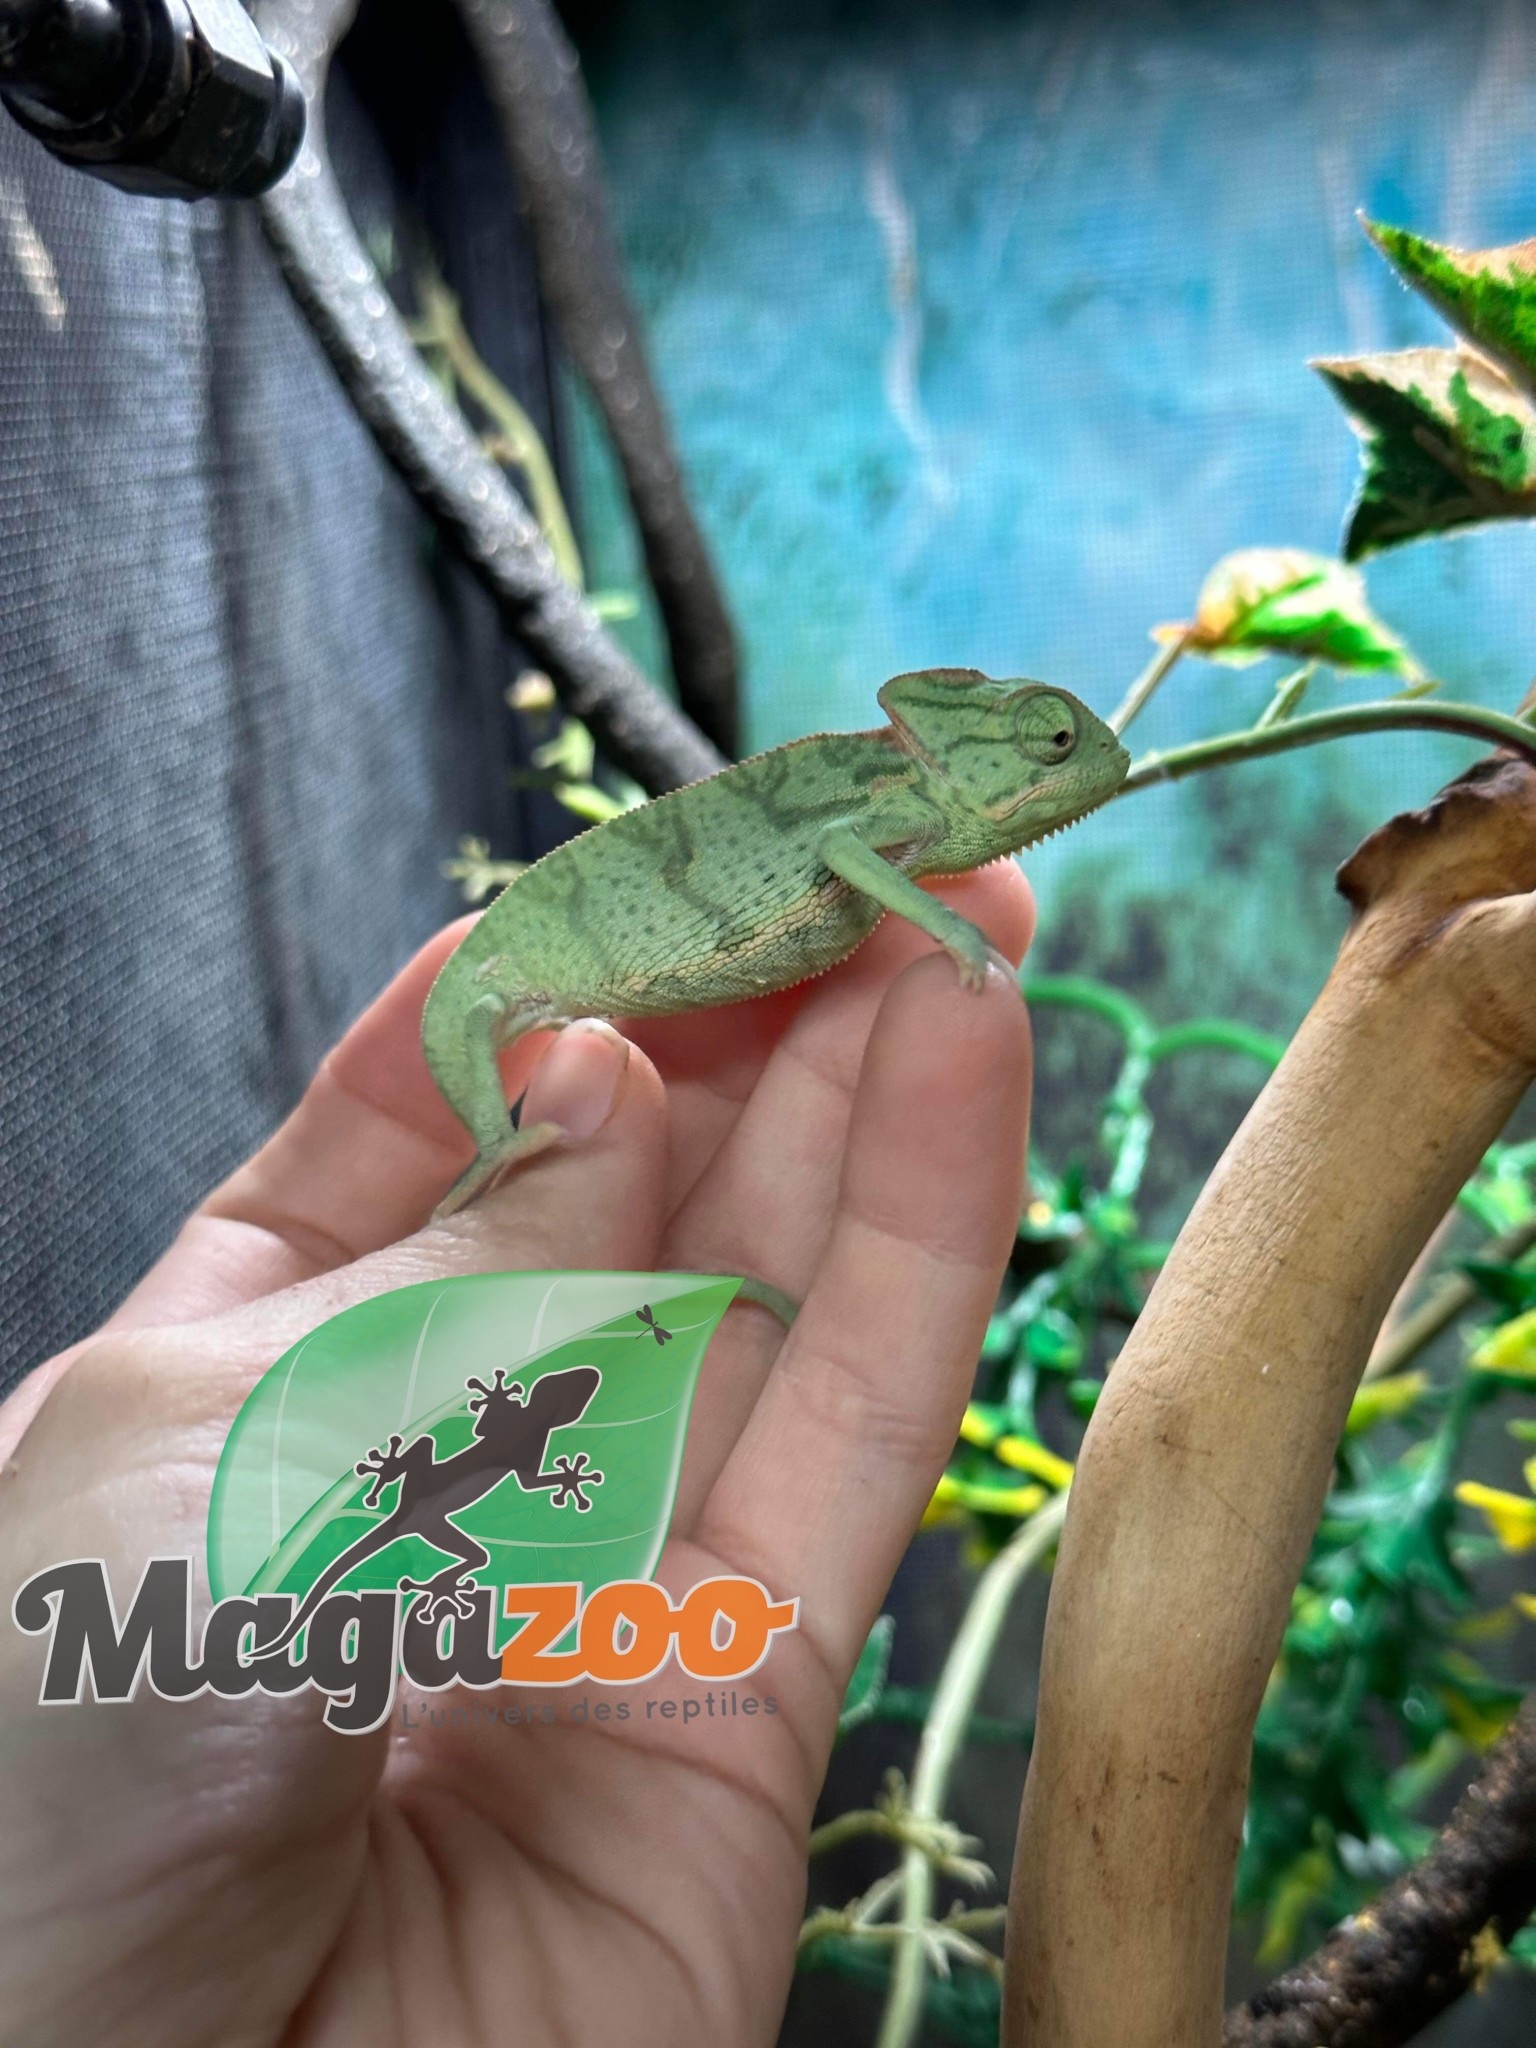 Magazoo Veiled chameleon Low Translucent Baby Male